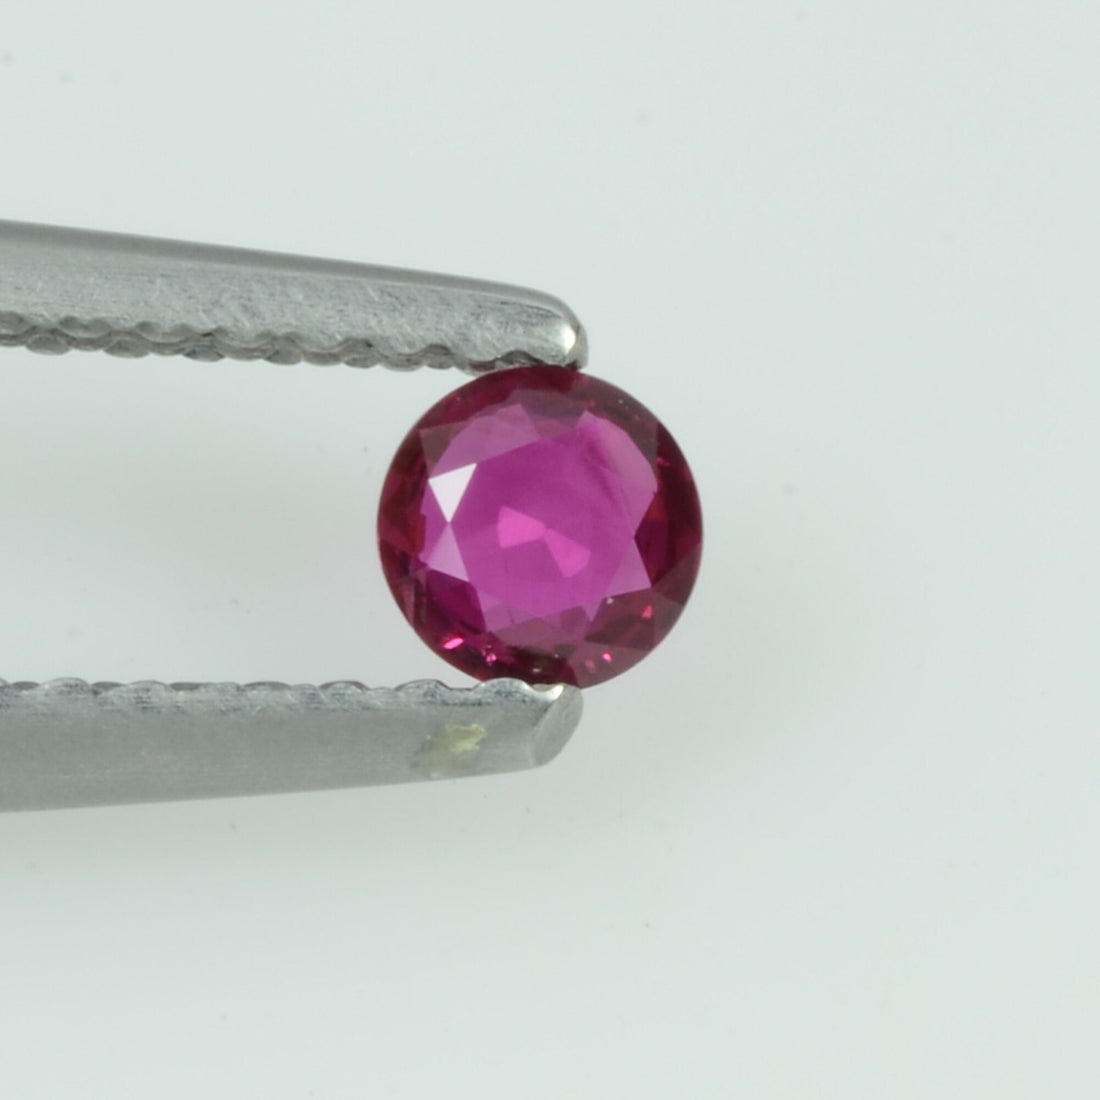 3.7 mm  Natural Burma Ruby Loose Gemstone Round Cut